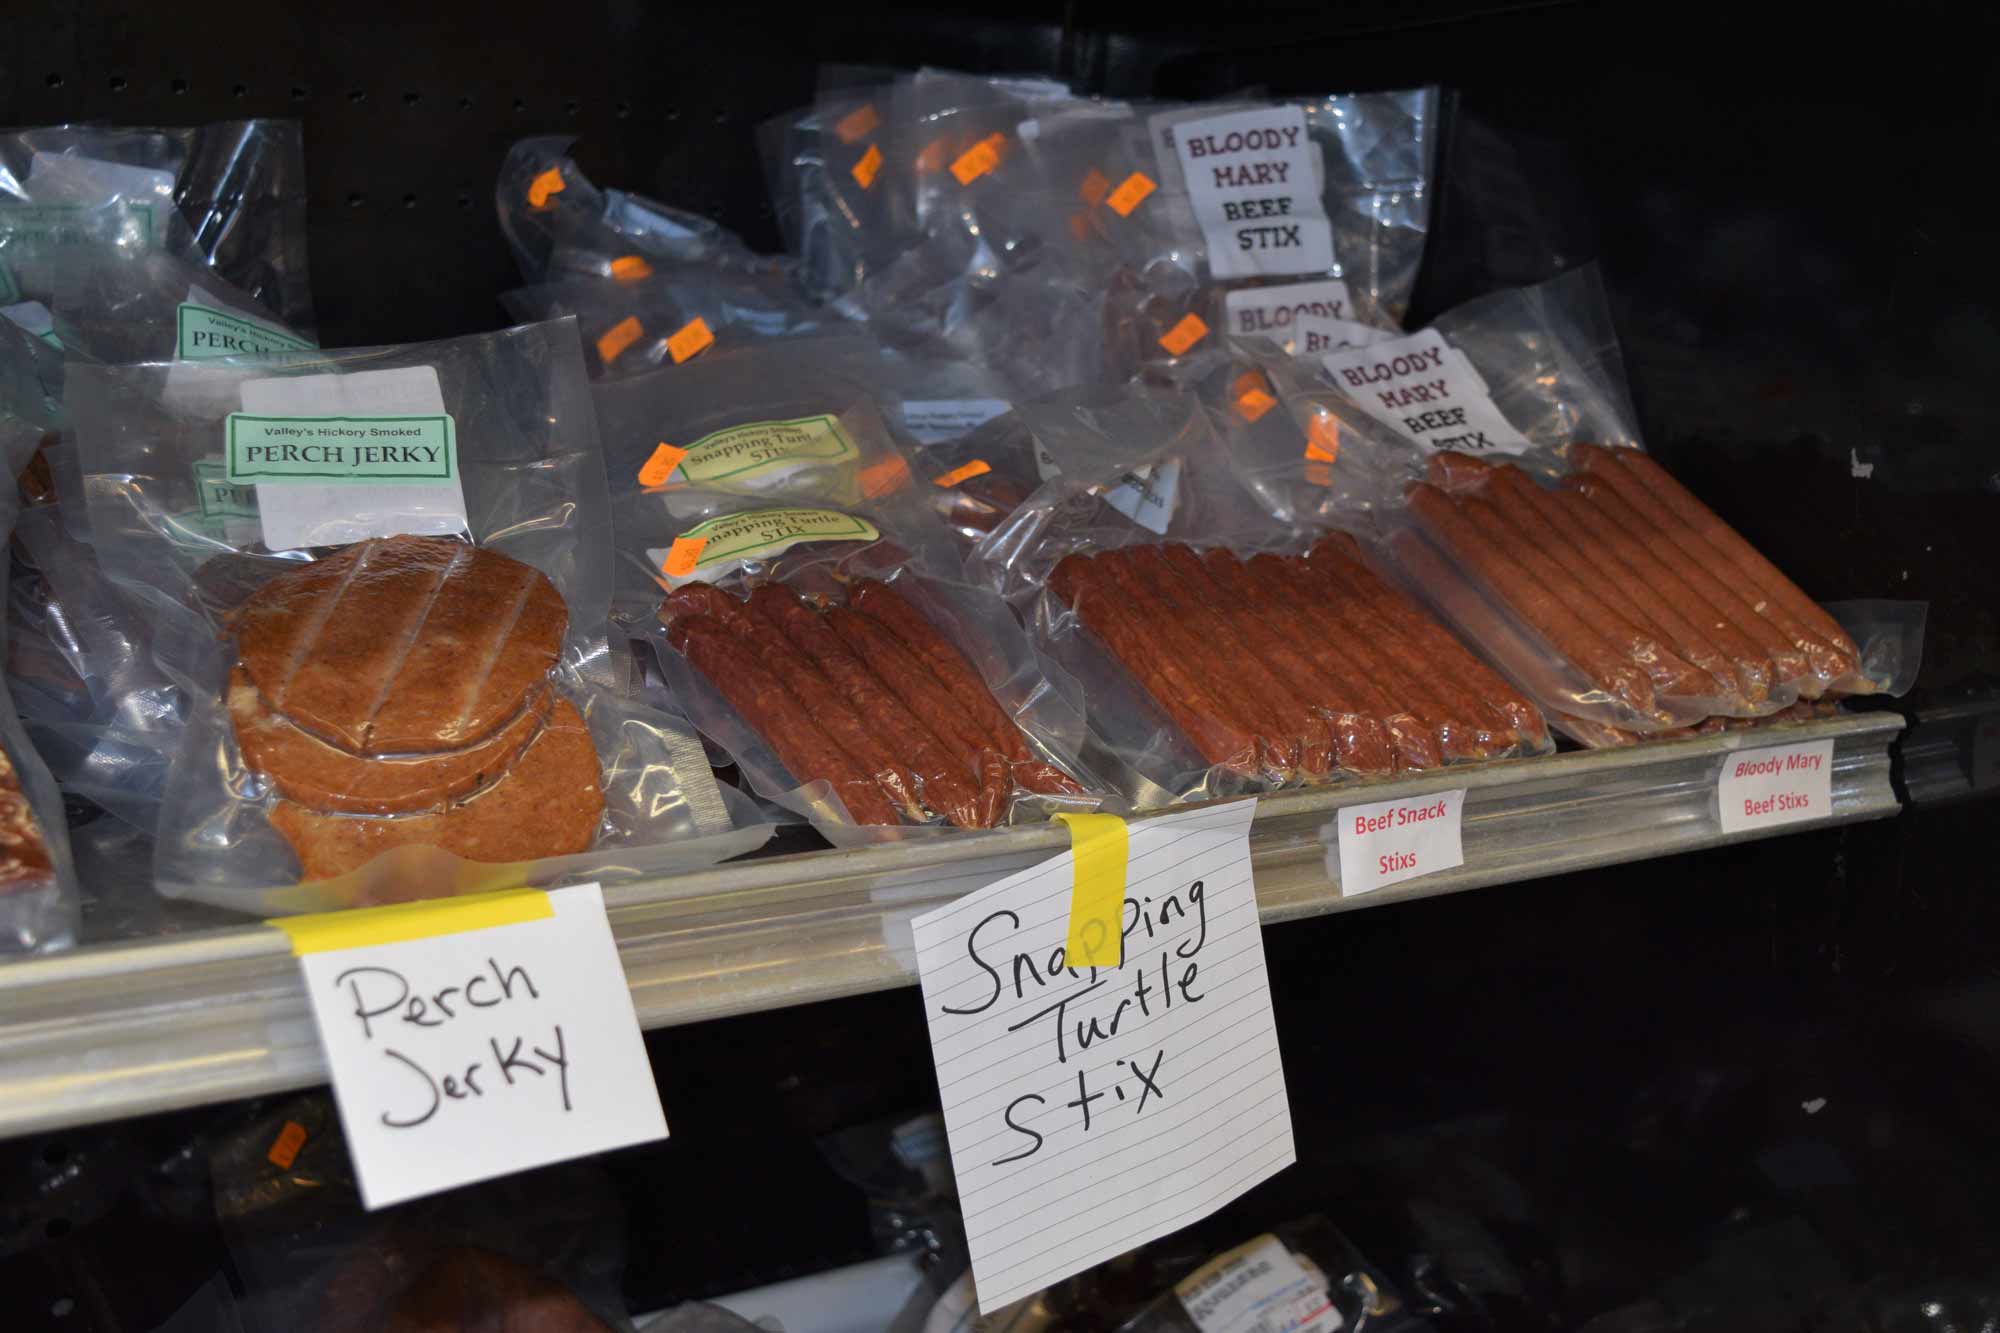 Selection of jerky on store shelf. Handwritten signs. Perch jerky. Snapping turtle stix.